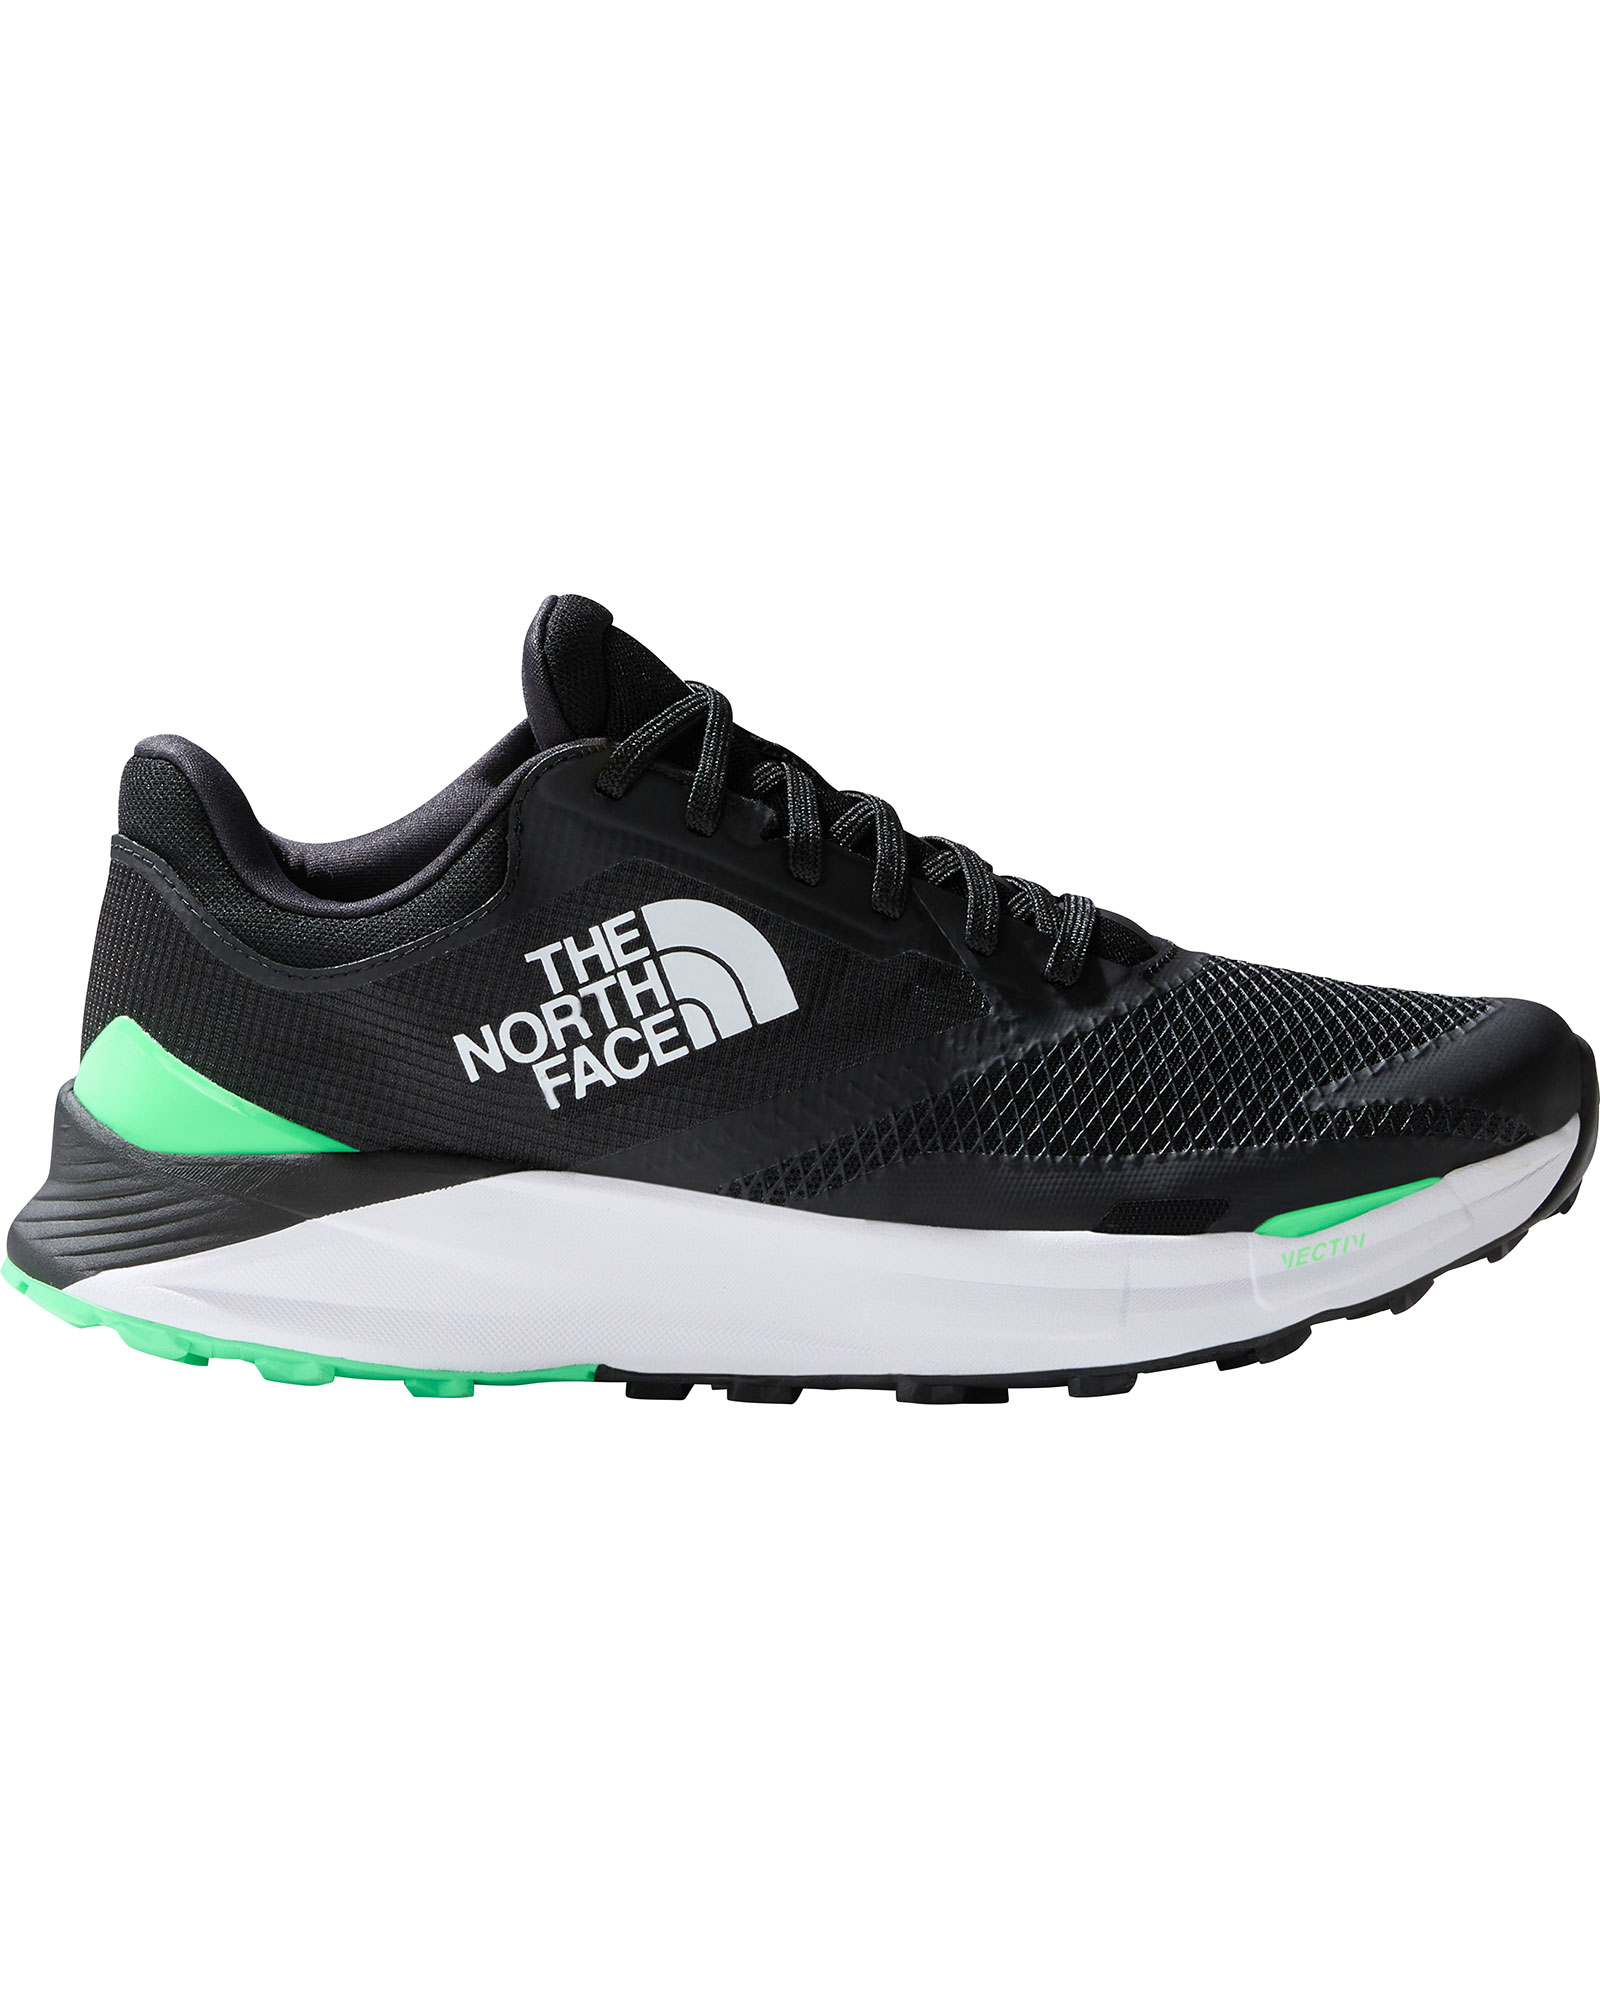 The North Face Vectiv Enduris 3 Men’s Trail Shoes - TNF Black/Chlorophyll Green UK 10.5